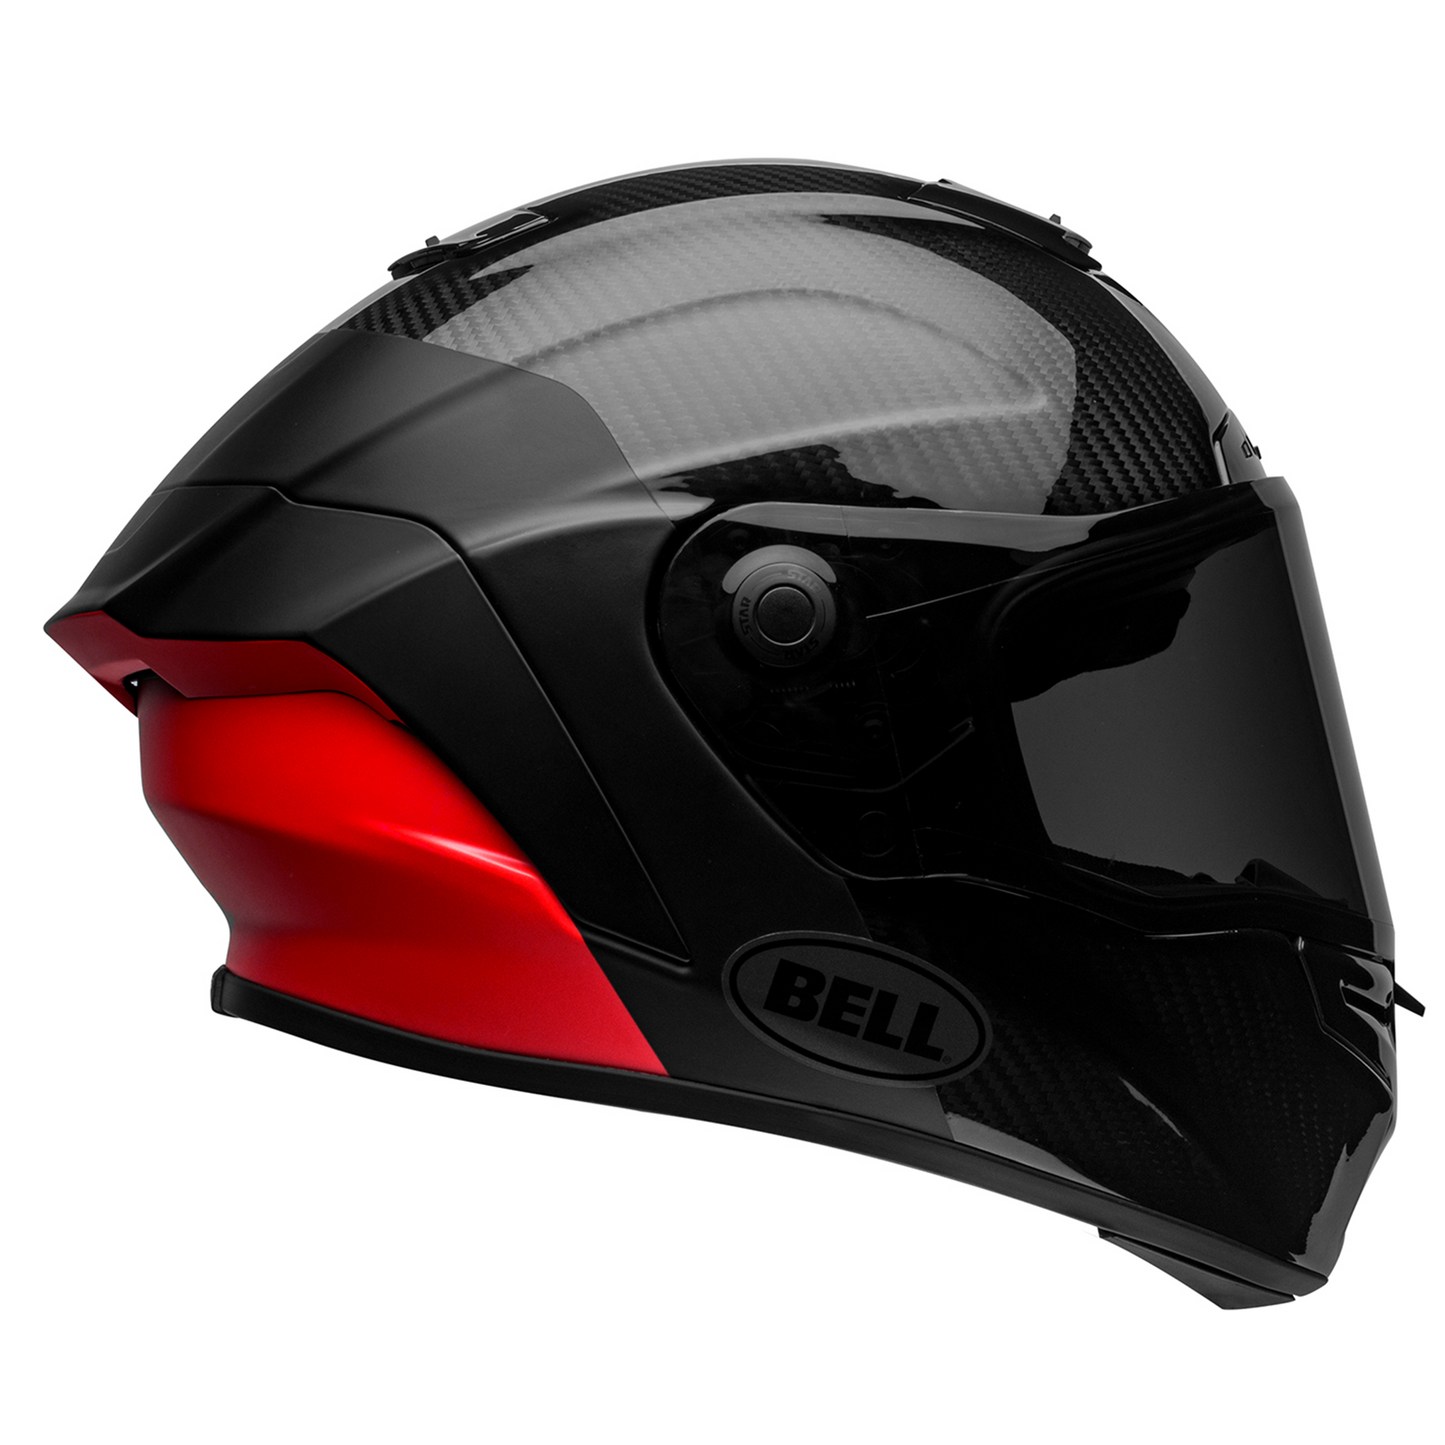 Bell Race Star Flex DLX - Lux Matt/Gloss Black/Red - Includes Protint Visor